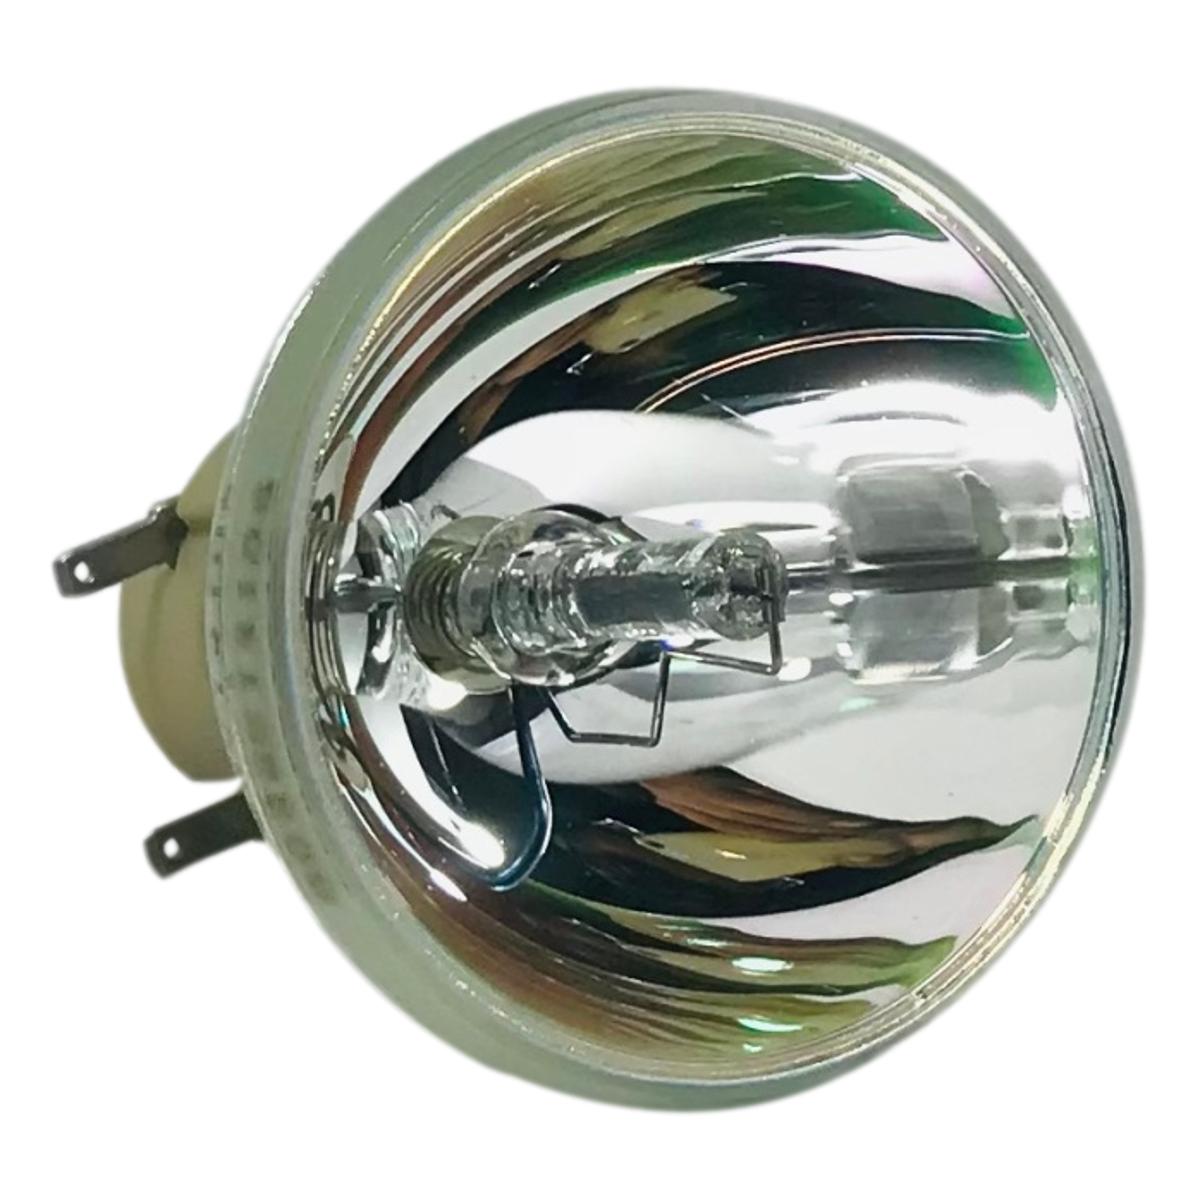 Viewsonic RLC-116 Philips Projector Bare Lamp